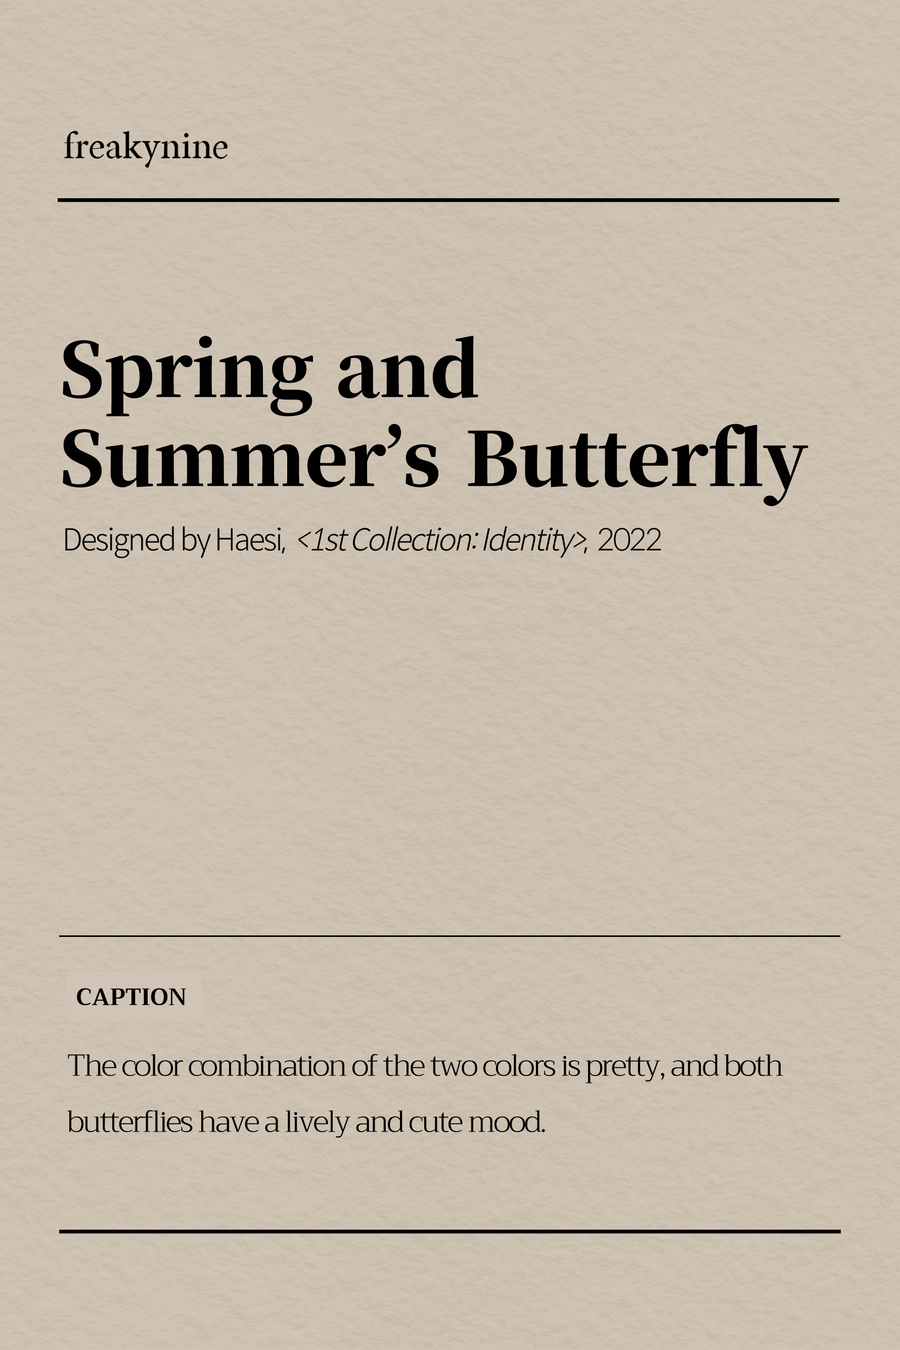 (Haesi) Spring and Summer’s Butterfly (2EA) - freakynine